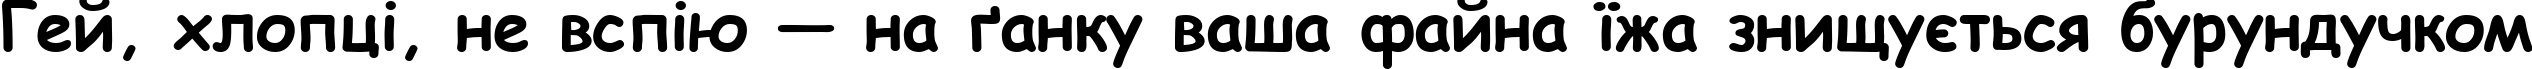 Пример написания шрифтом Comic Sans MS Bold текста на украинском